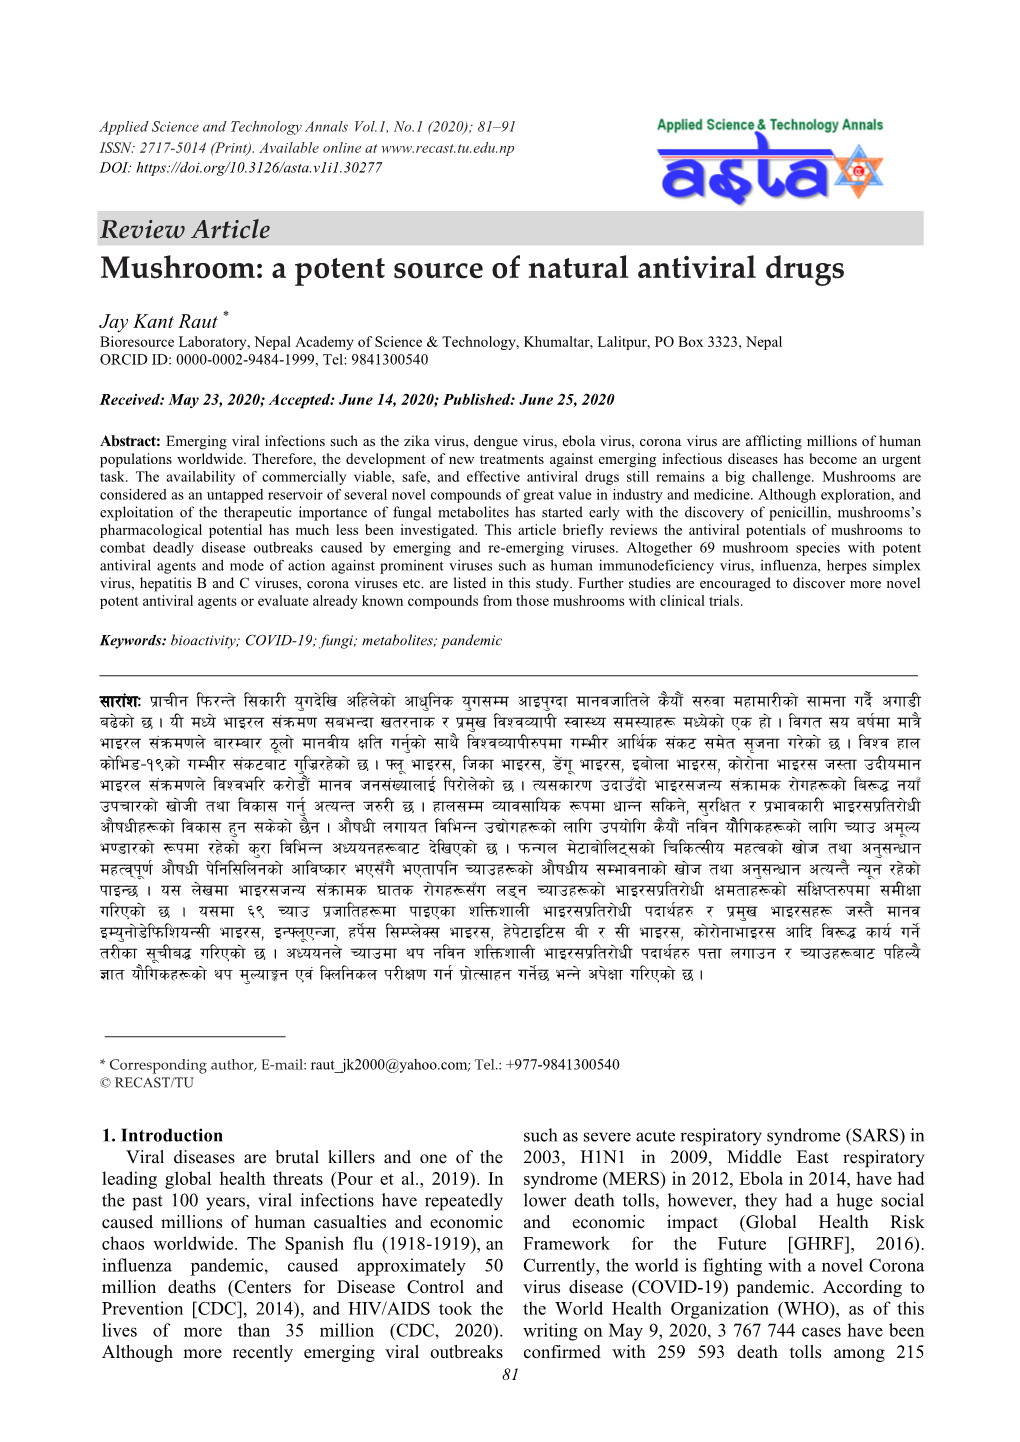 Mushroom: a Potent Source of Natural Antiviral Drugs